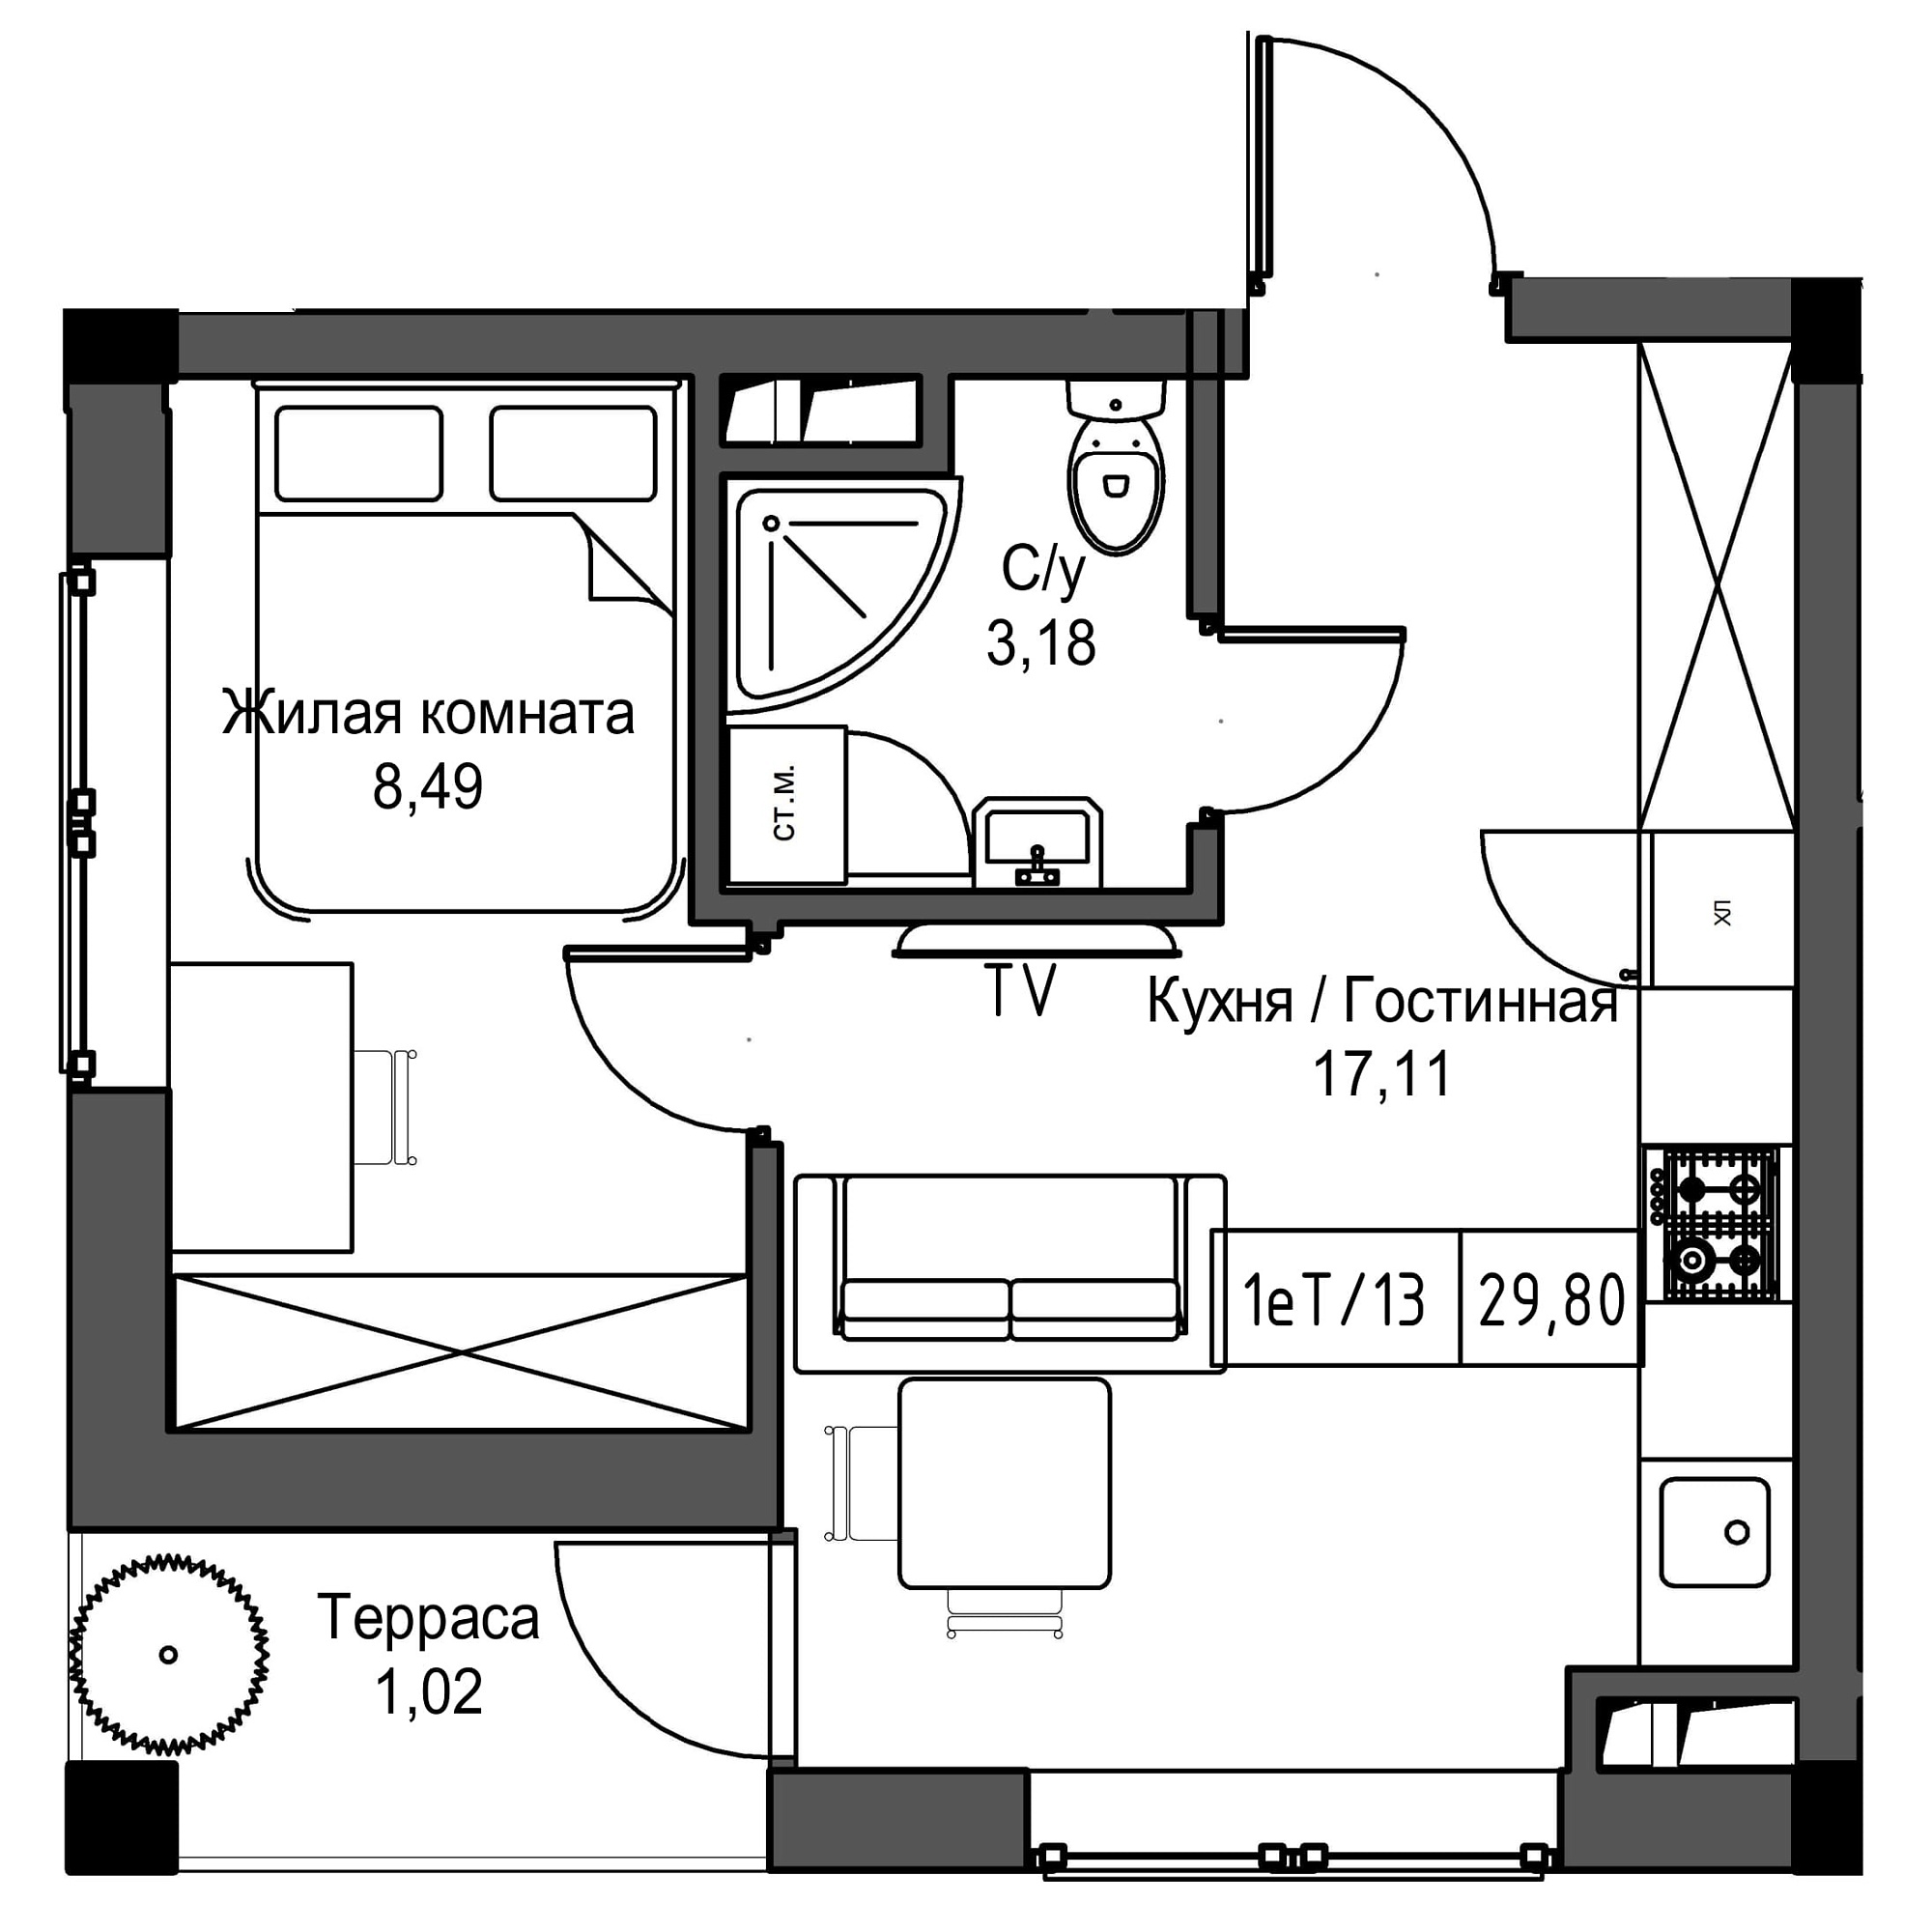 Планування 1-к квартира площею 29.8м2, UM-002-09/0086.